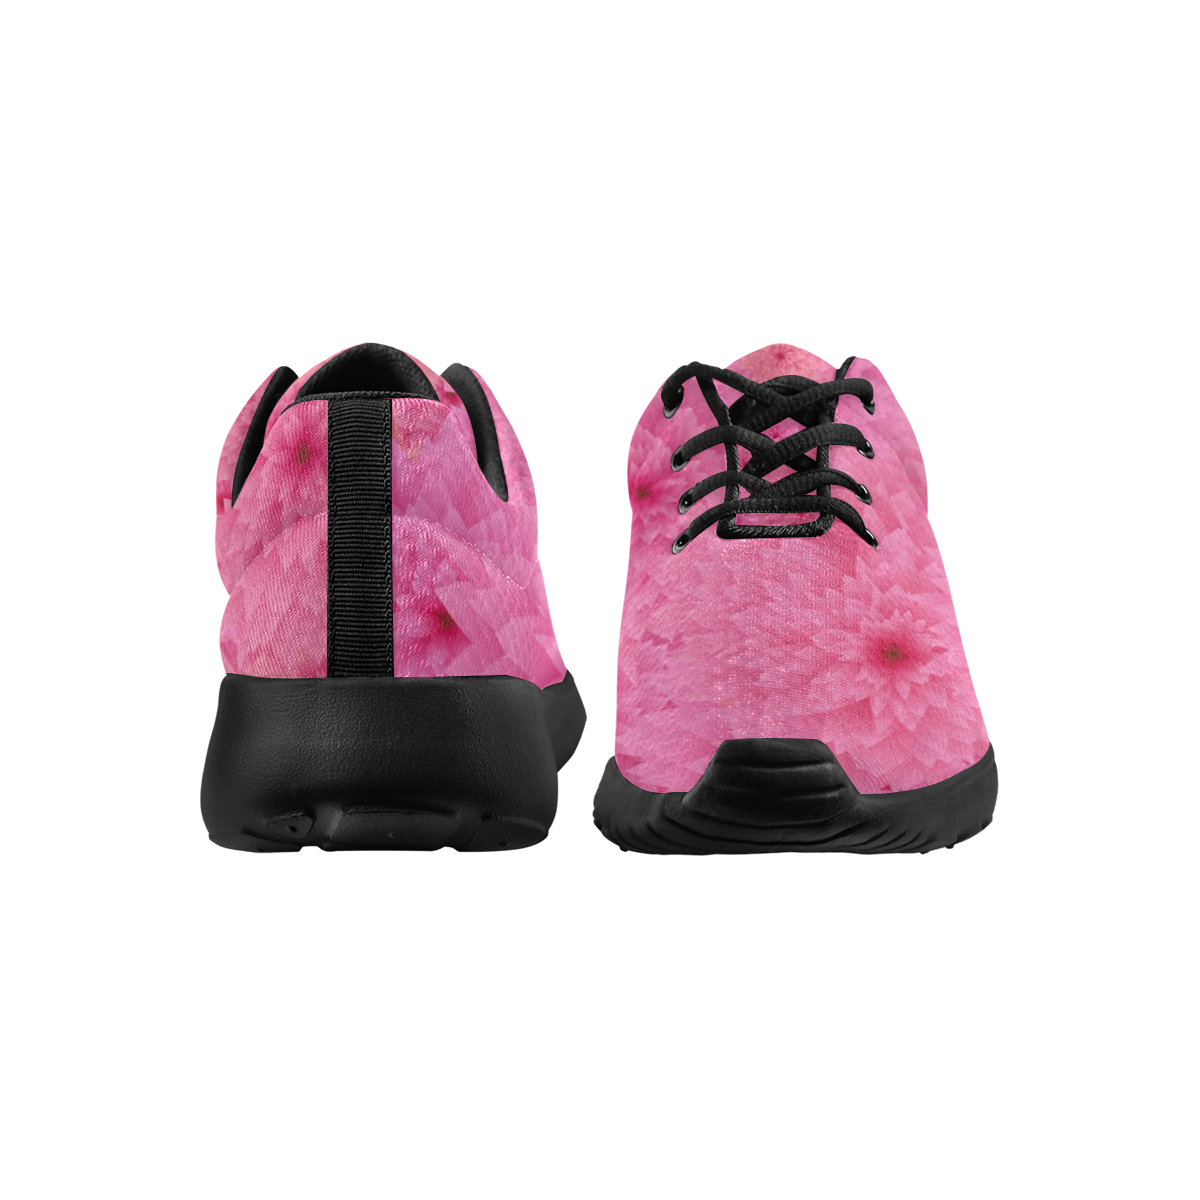 stylized-763795 Women's Athletic Shoes (Model 0200)